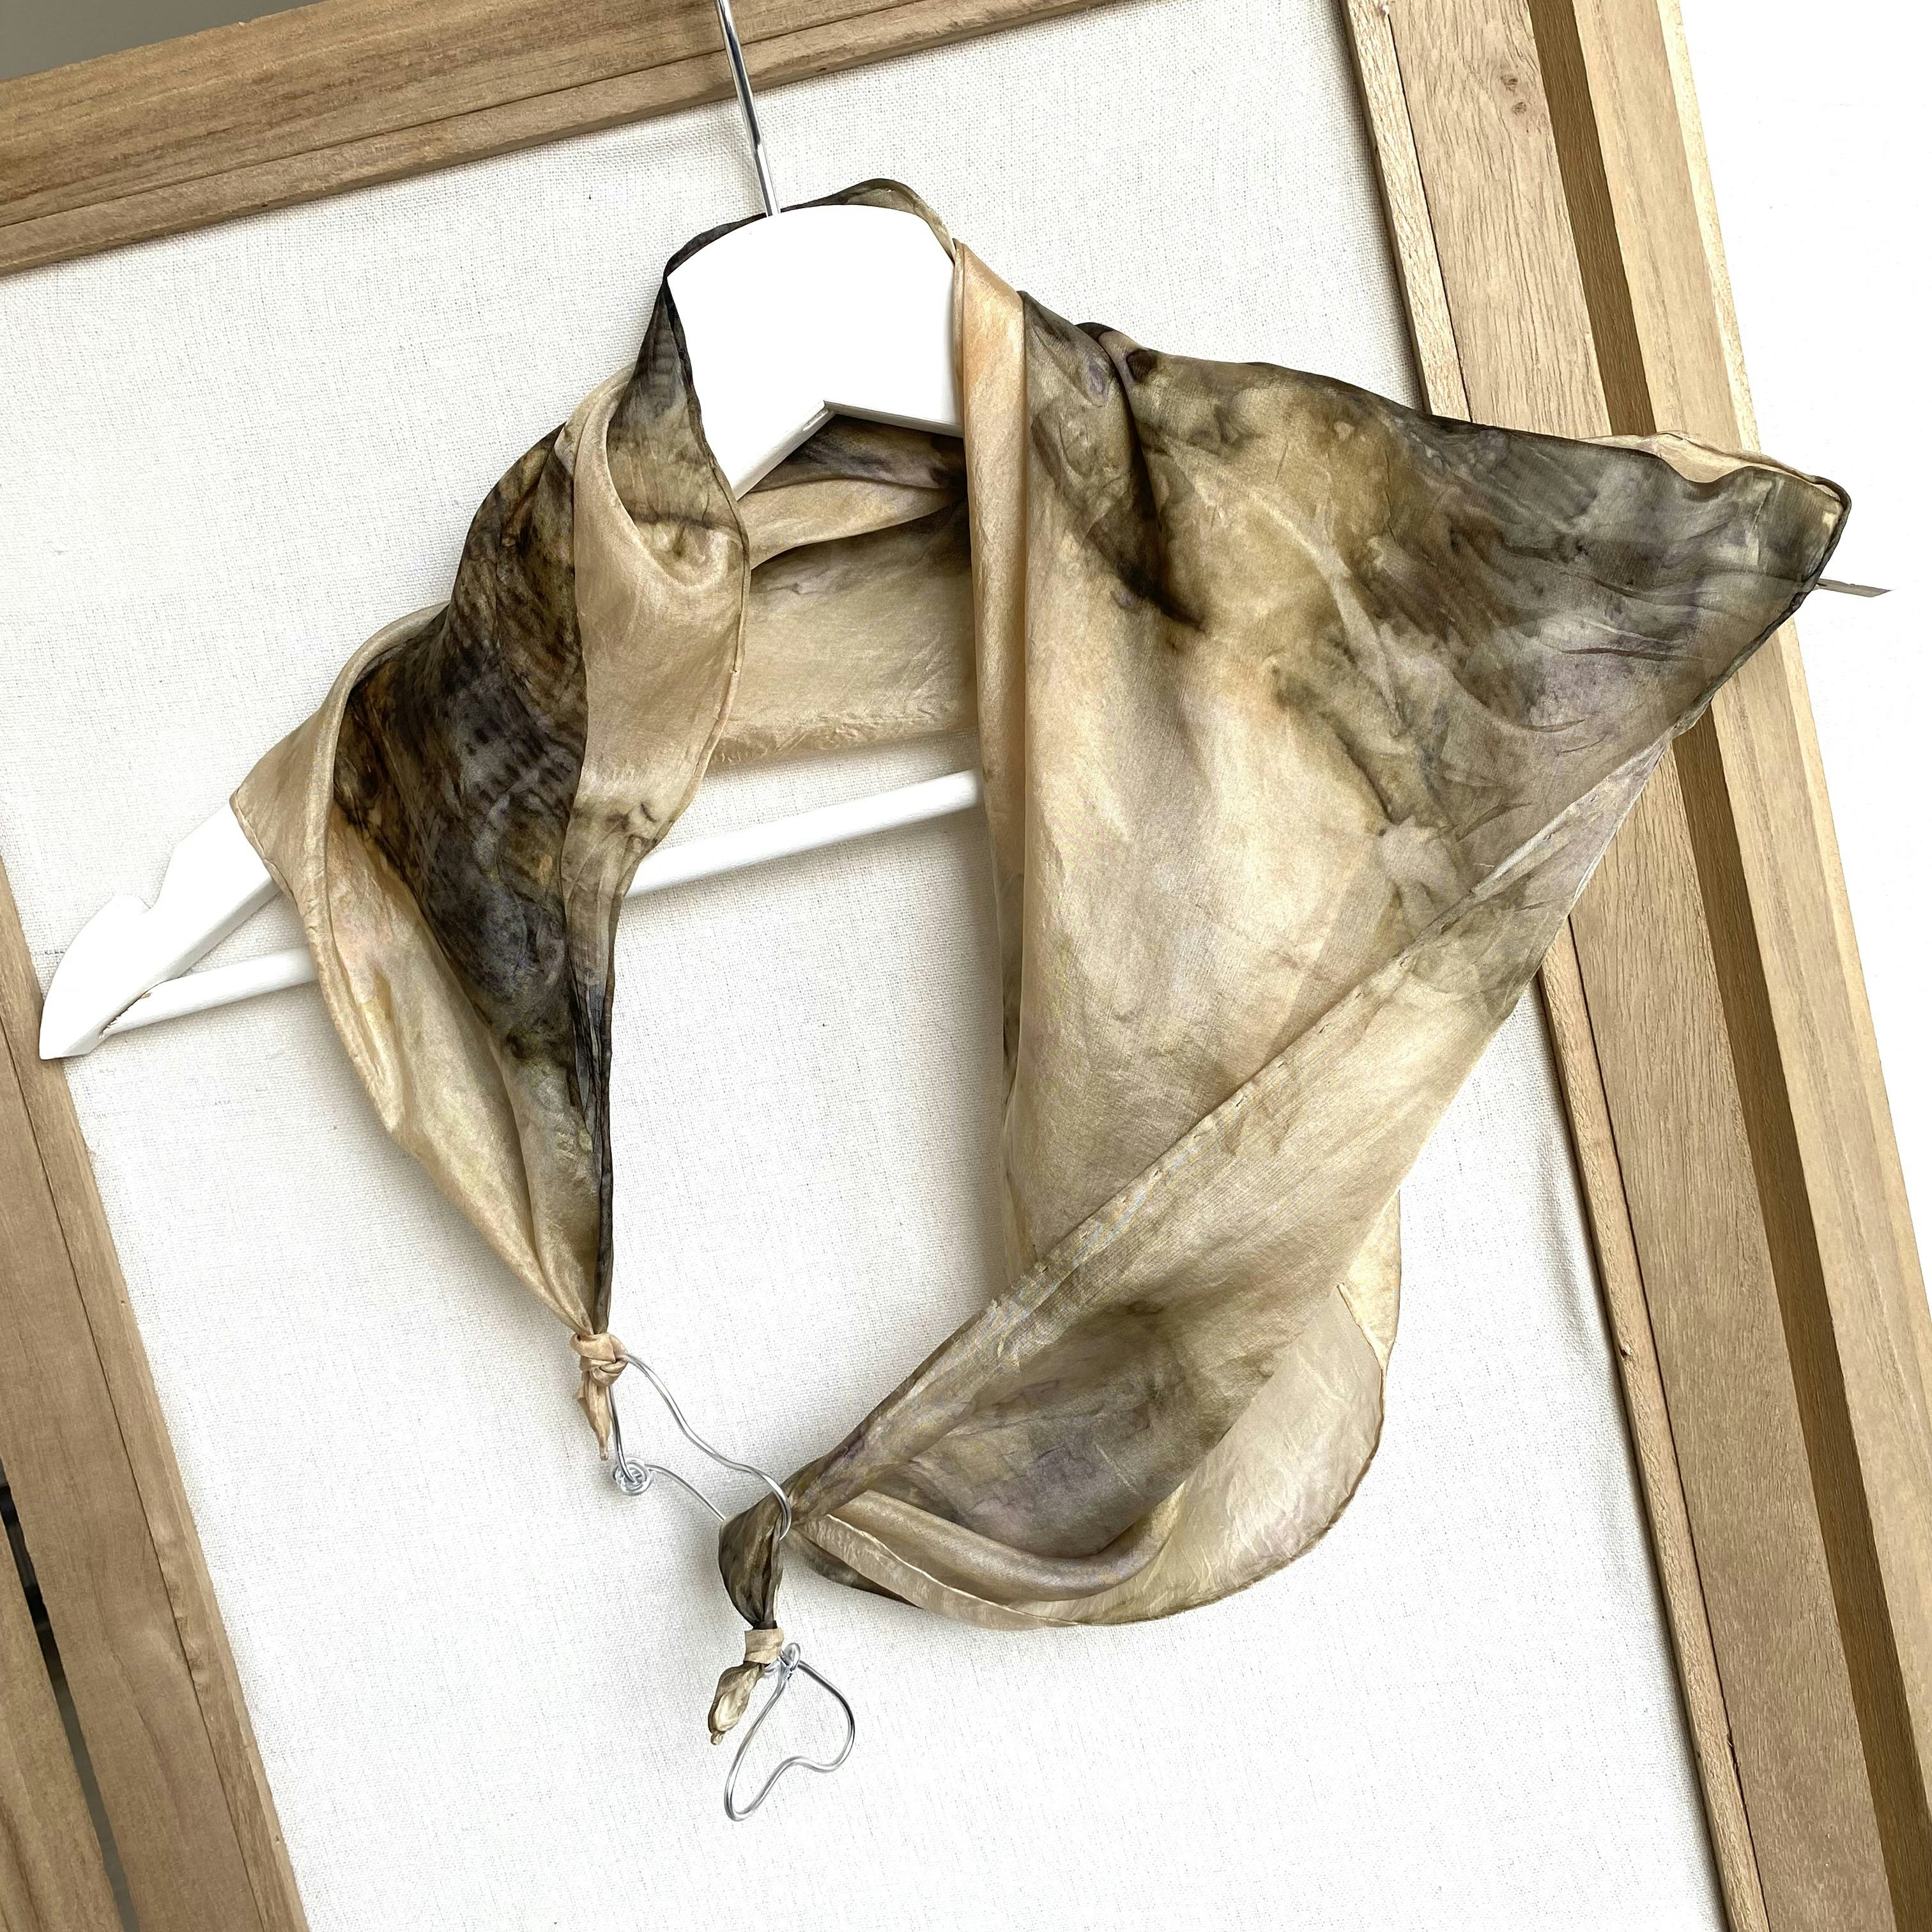 Foulard gioielli di seta tinto con foglie di acero, produit artisanal en vente directe en Suisse